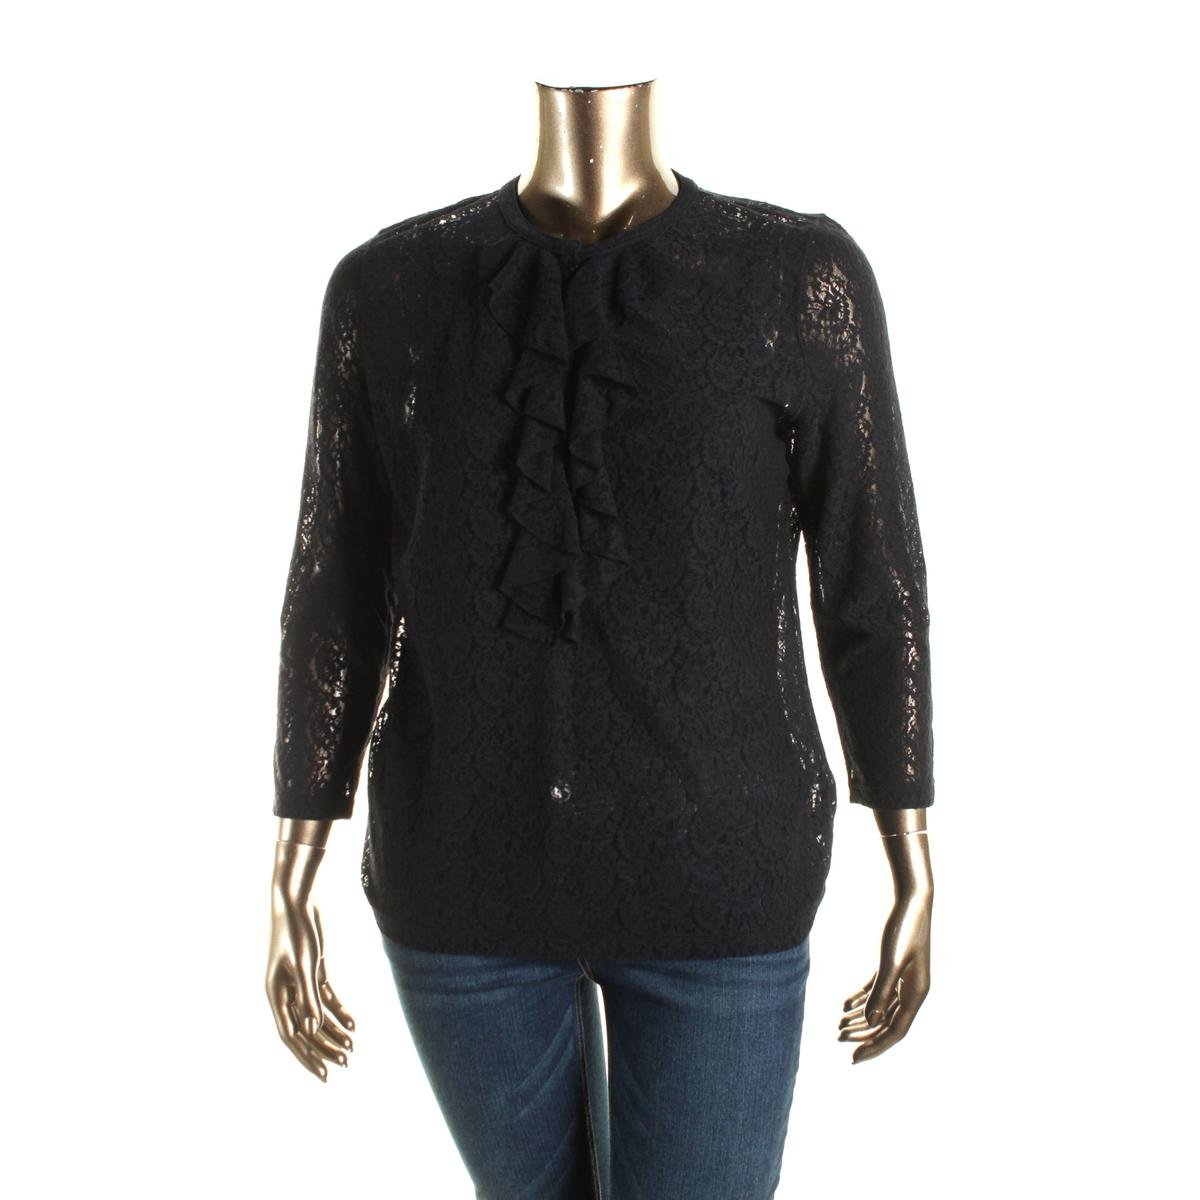 LRL Lauren Jeans Co. 1547 Womens Black Lace Ruffled Blouse Top S BHFO